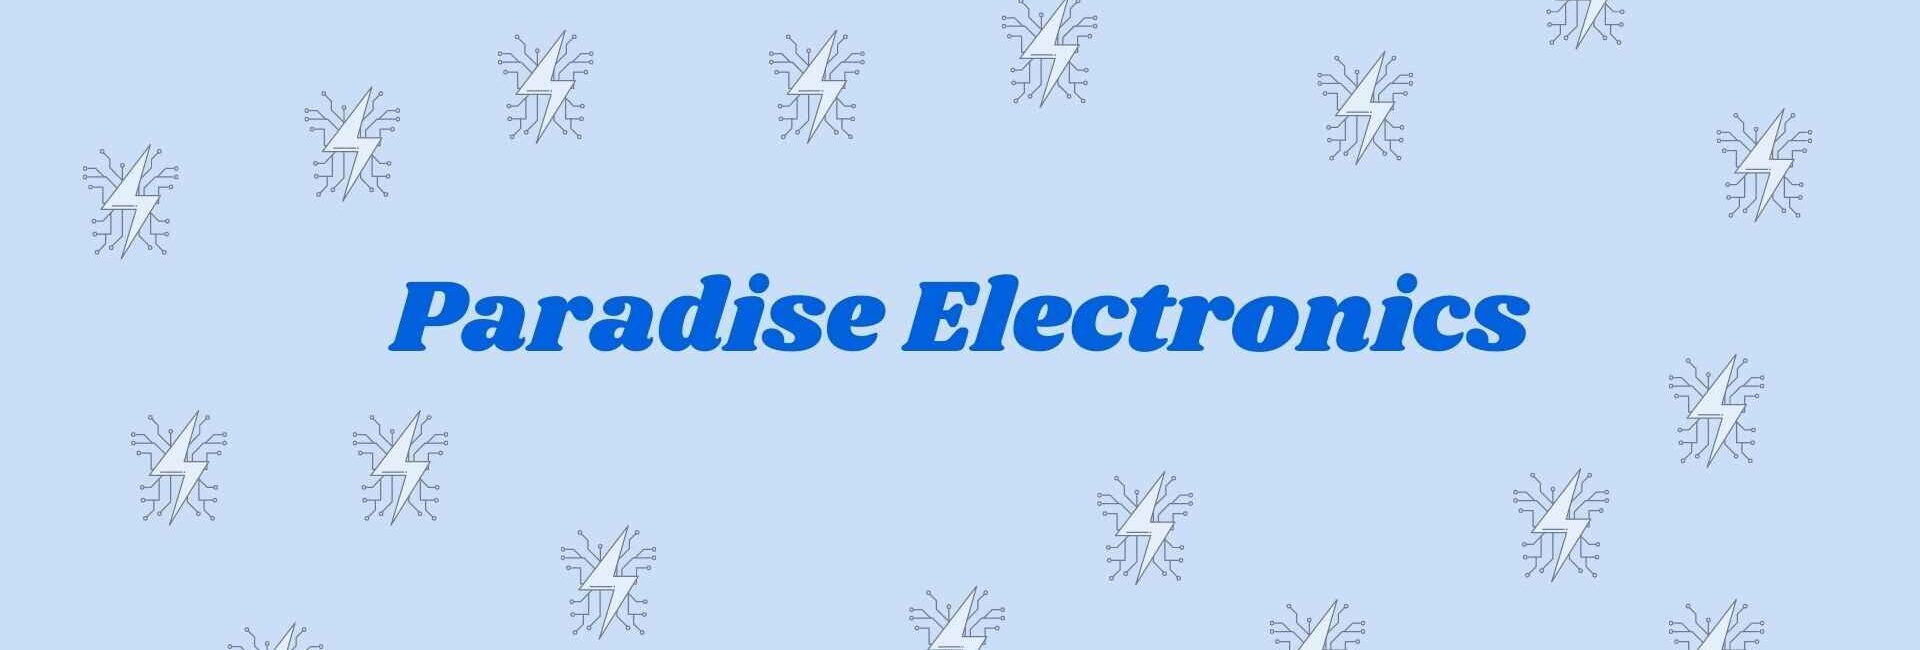 aradise Electronics - Electronics Goods Dealer in Noida